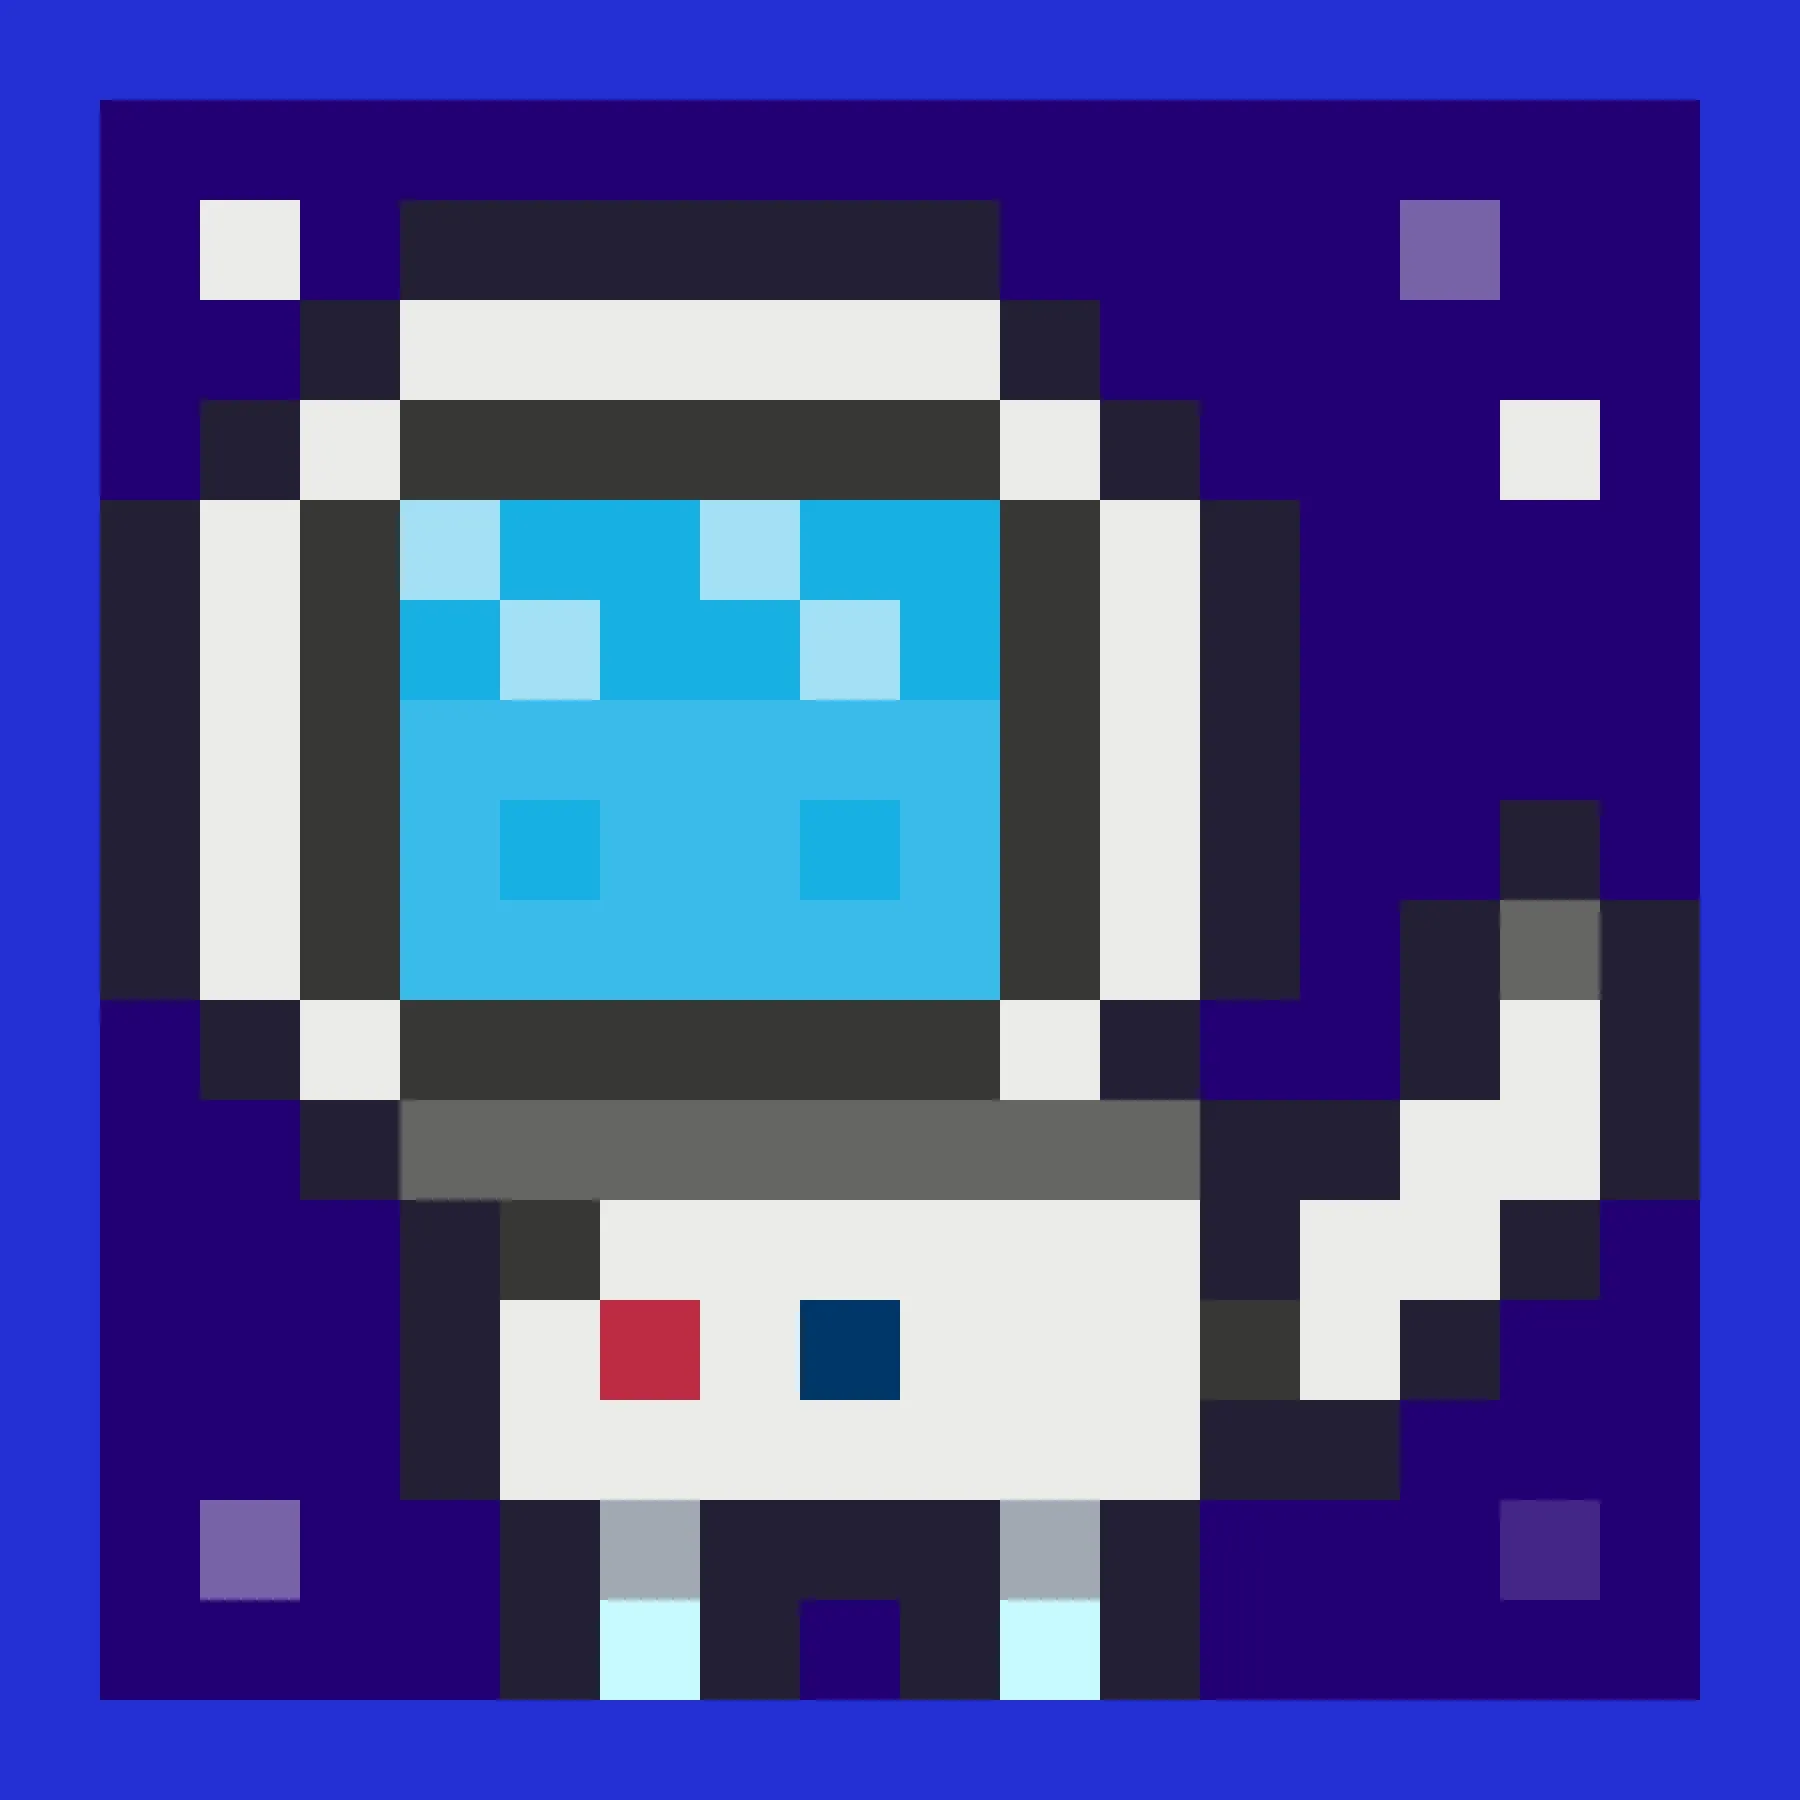 BitCat Astronaut #16